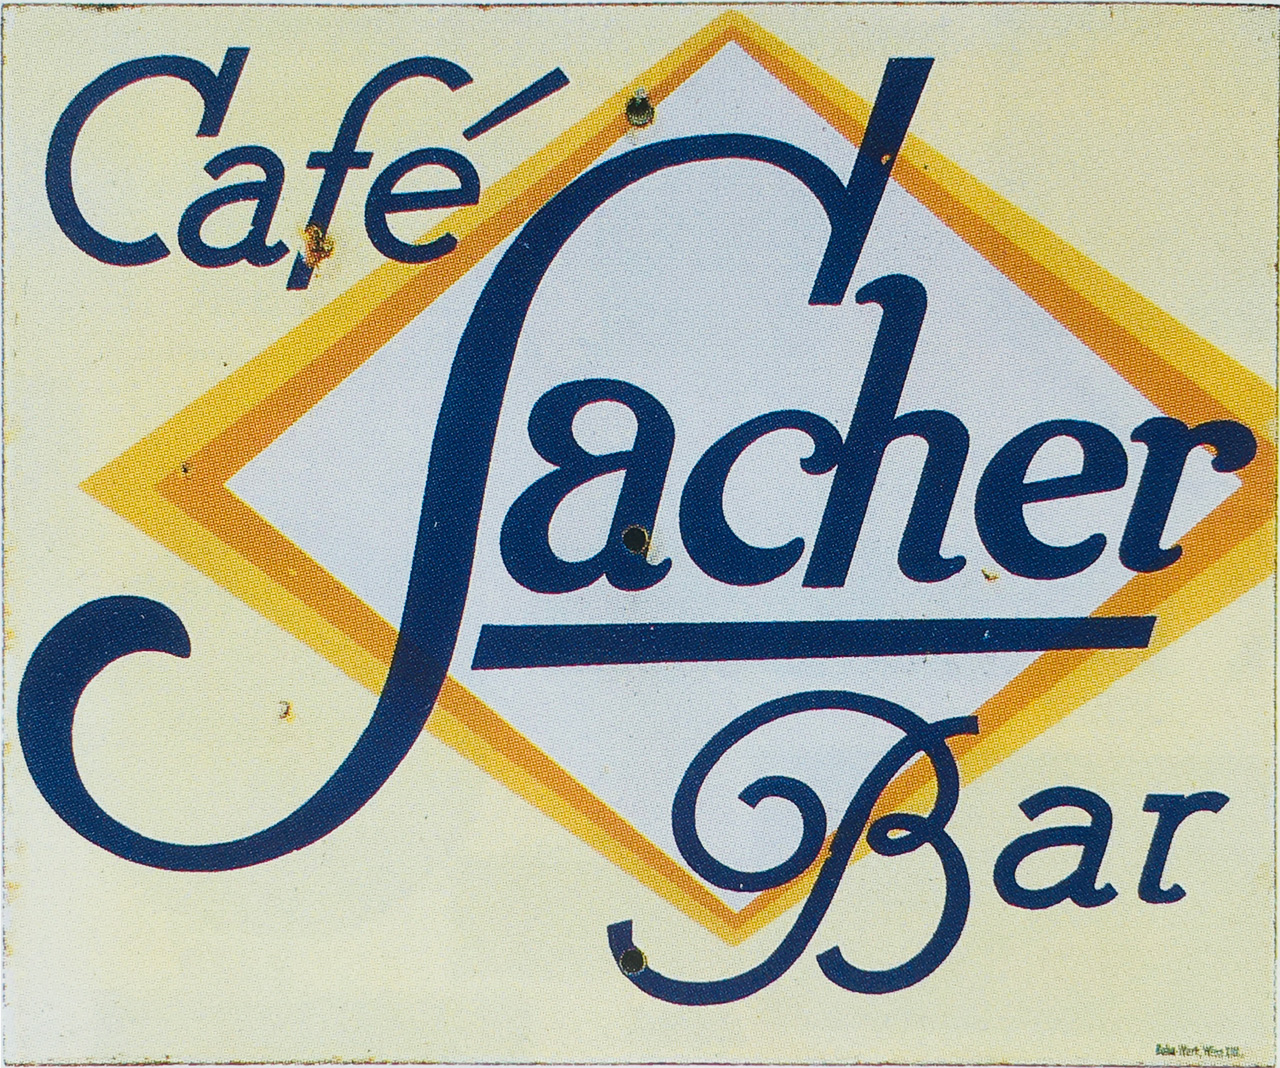 Cafe Sacher